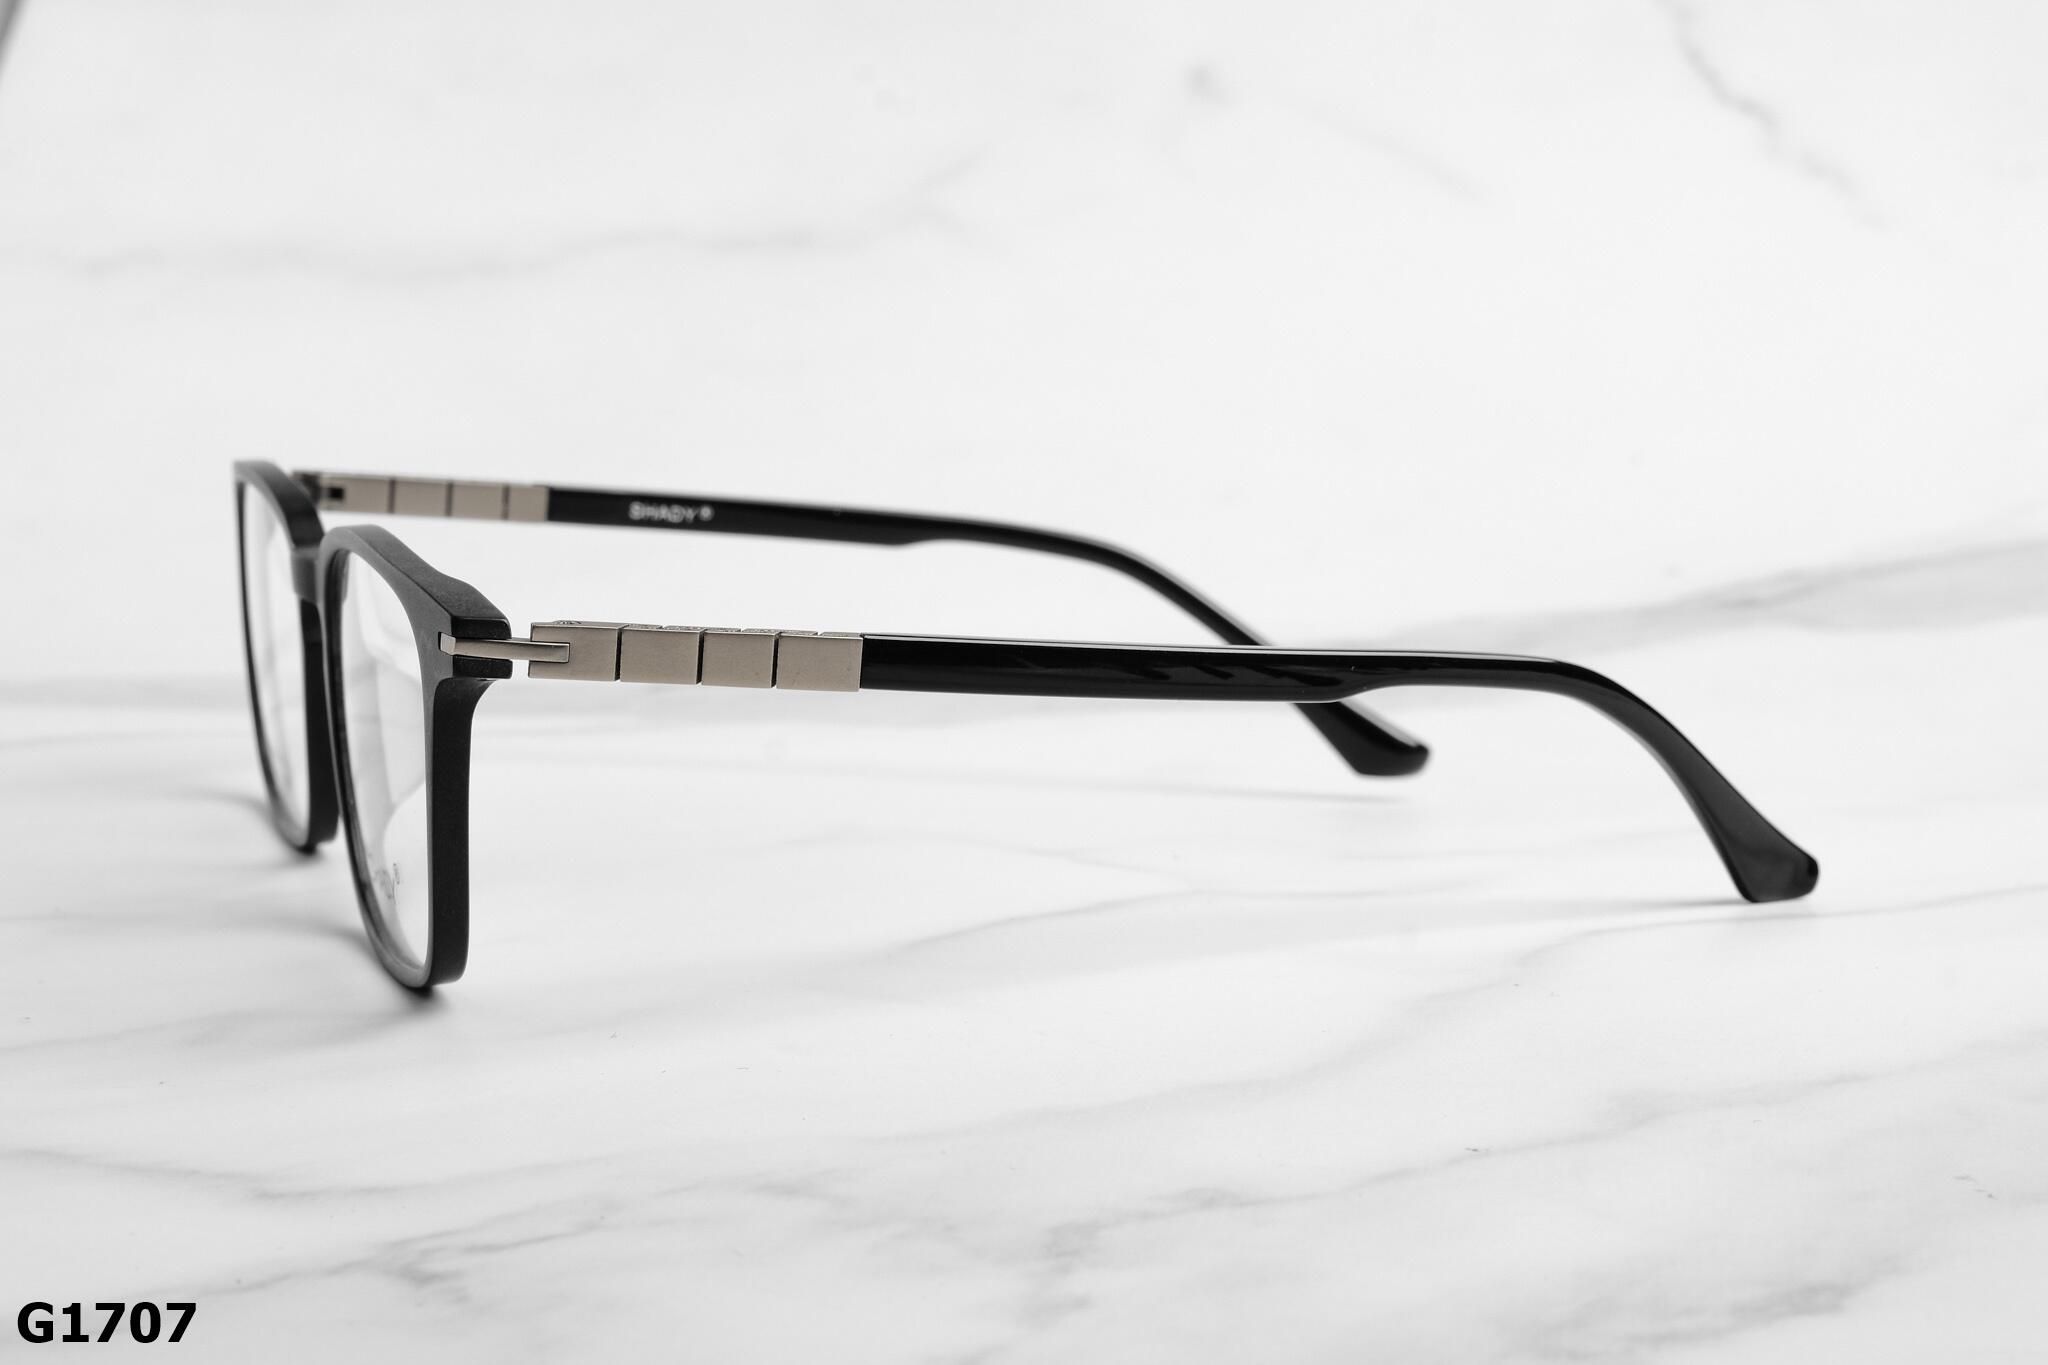  SHADY Eyewear - Glasses - G1707 